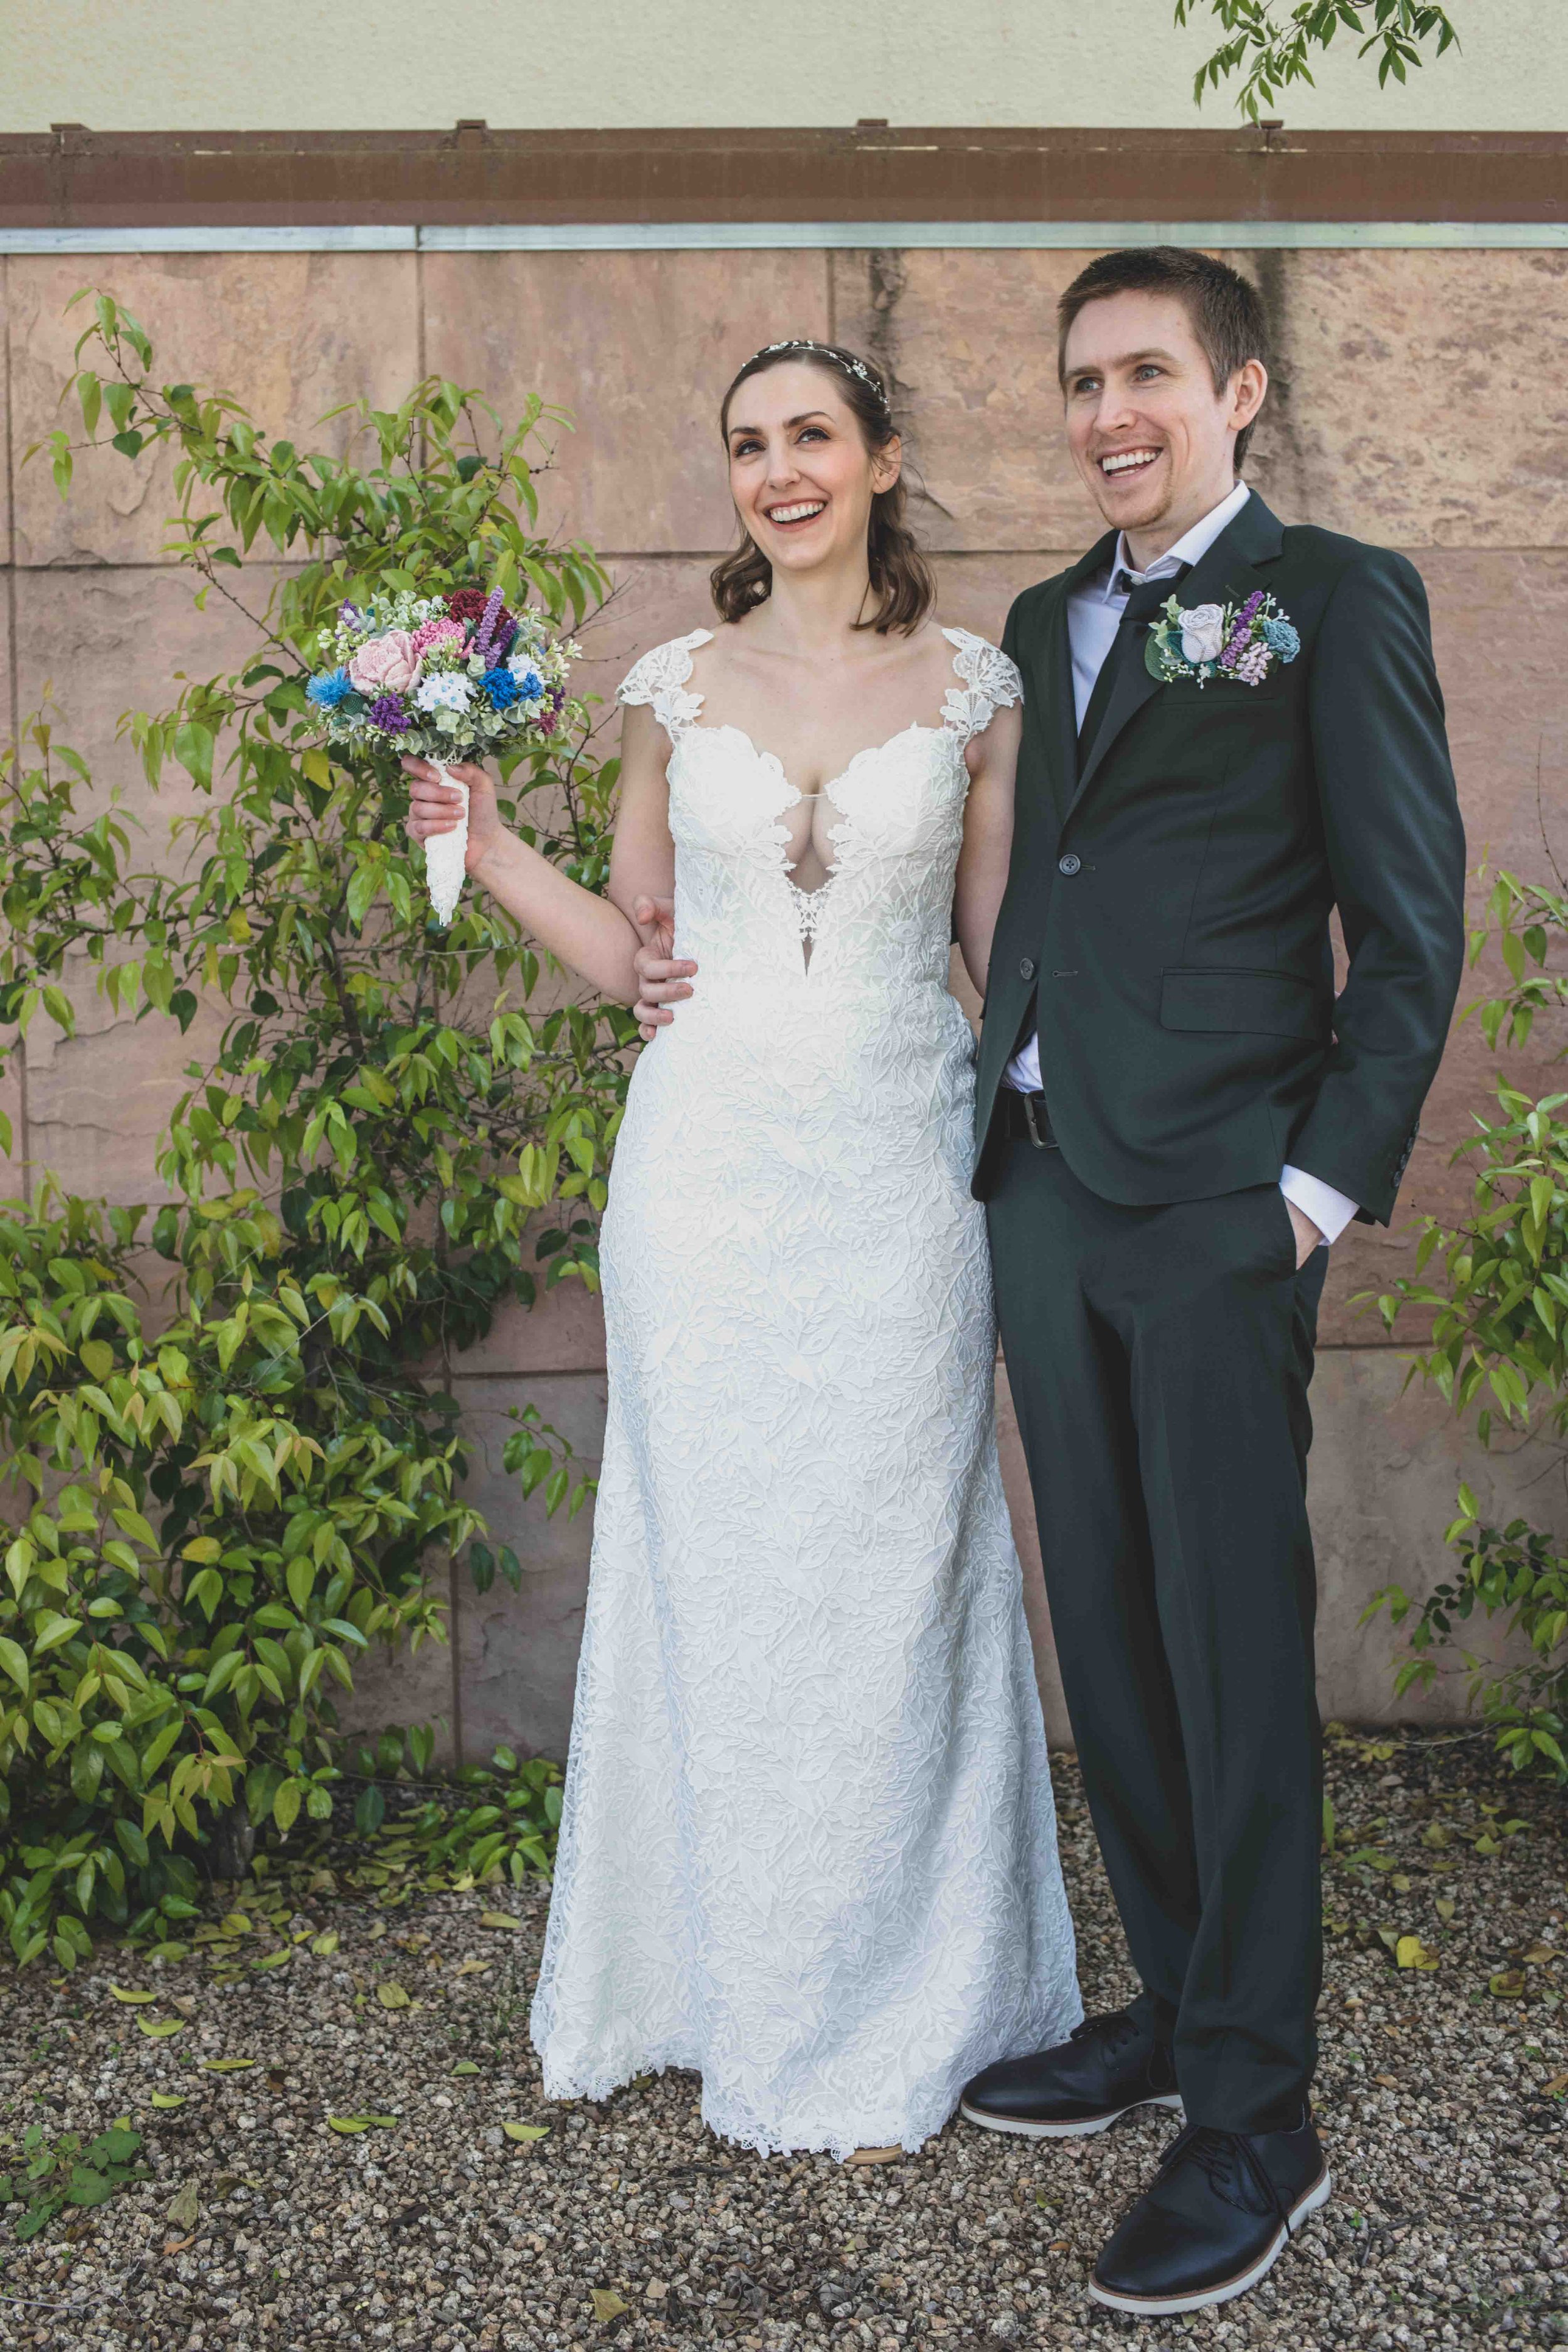 Bride and Groom pose for their wedding day by Chander, Arizona Wedding Photographer Jennifer Lind Schutsky.